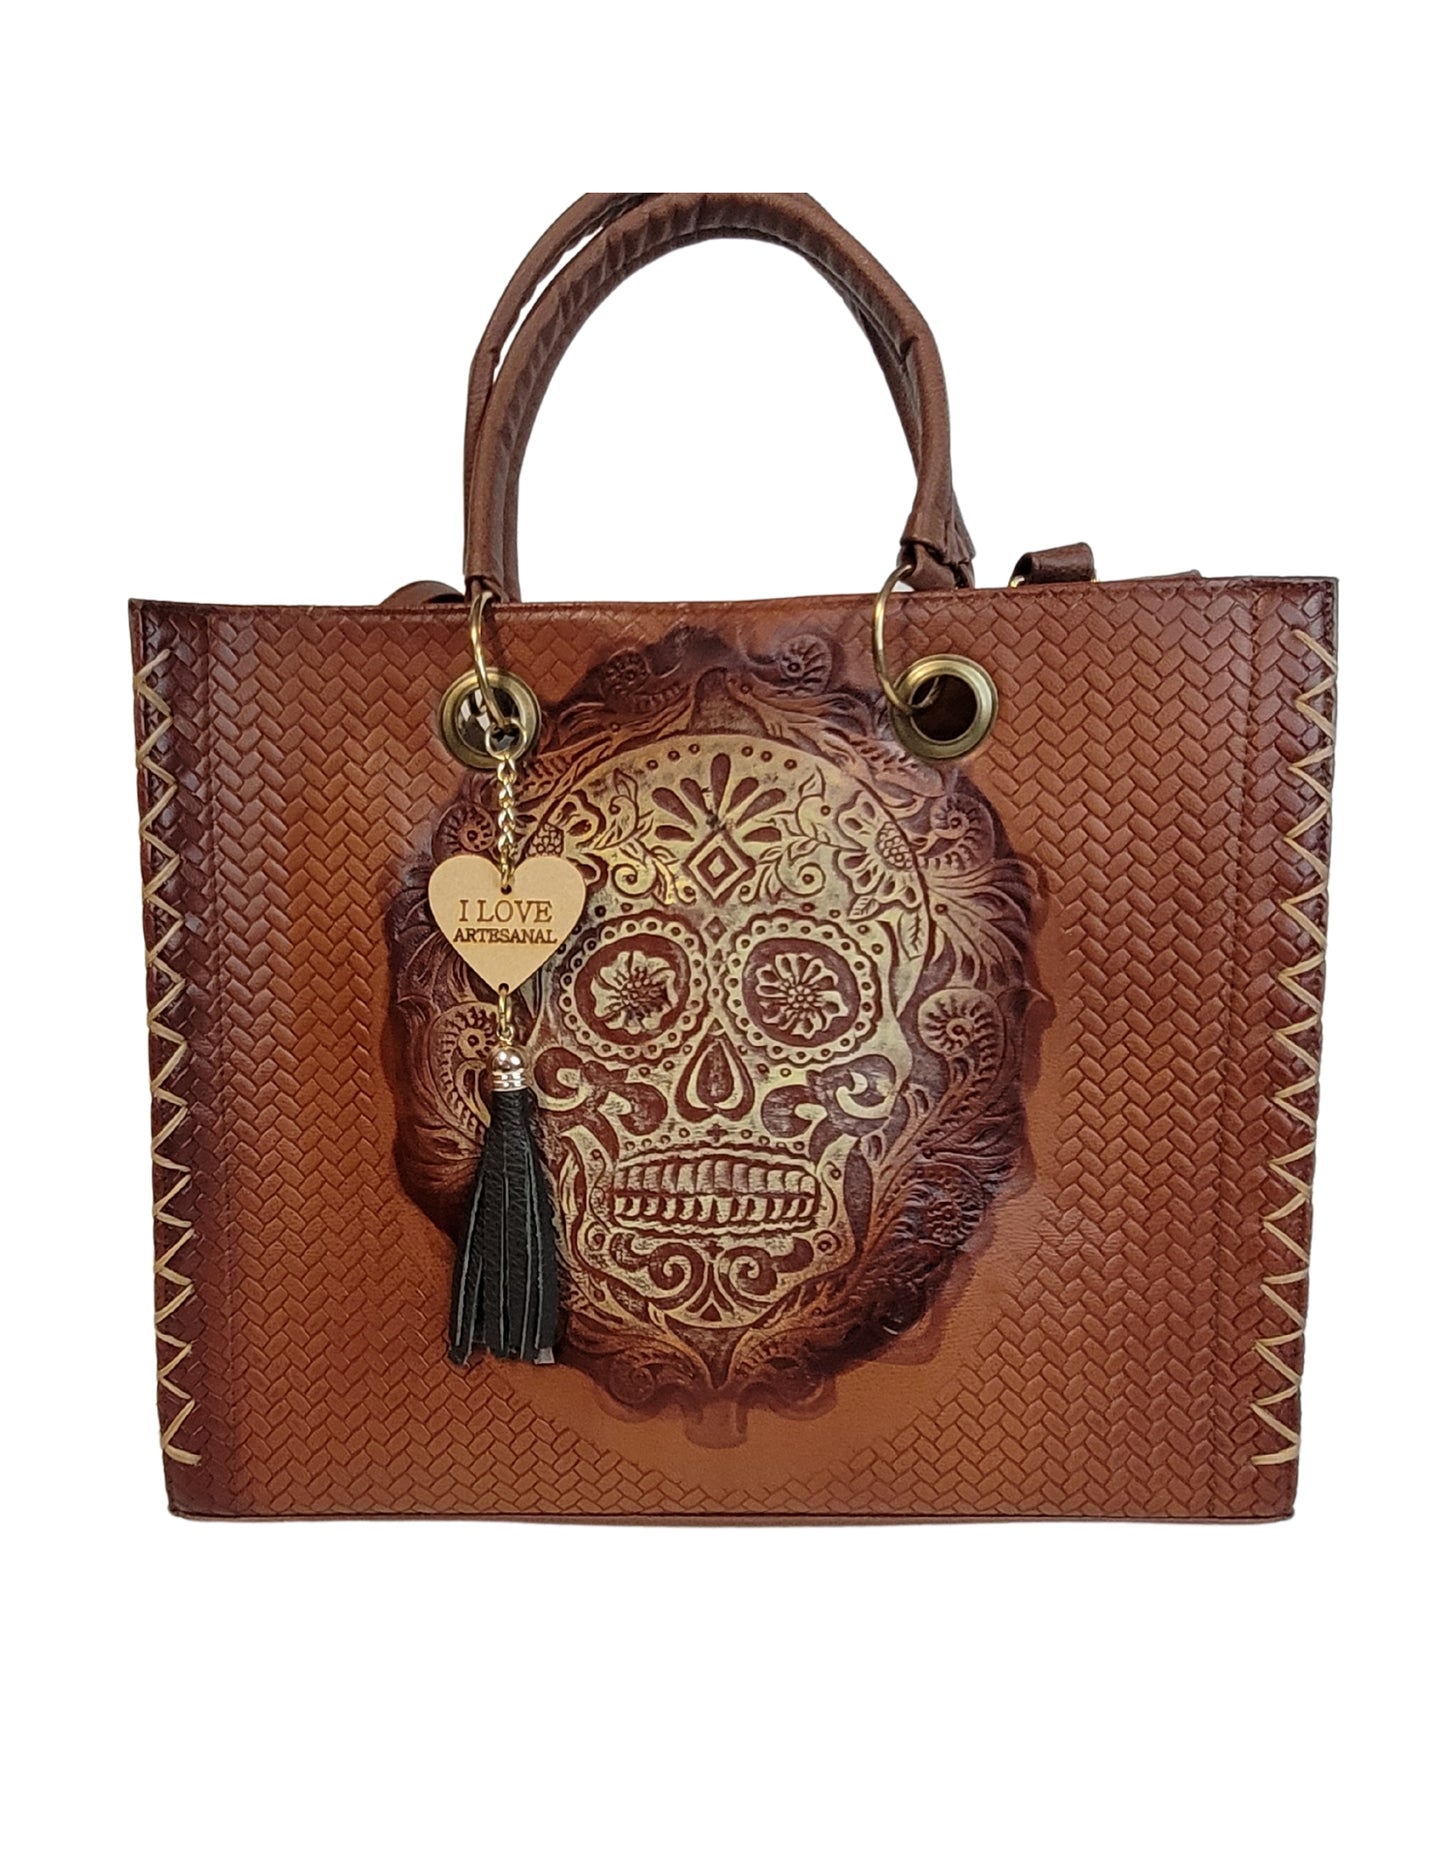 Handmade leather purse from Oaxaca Mexico